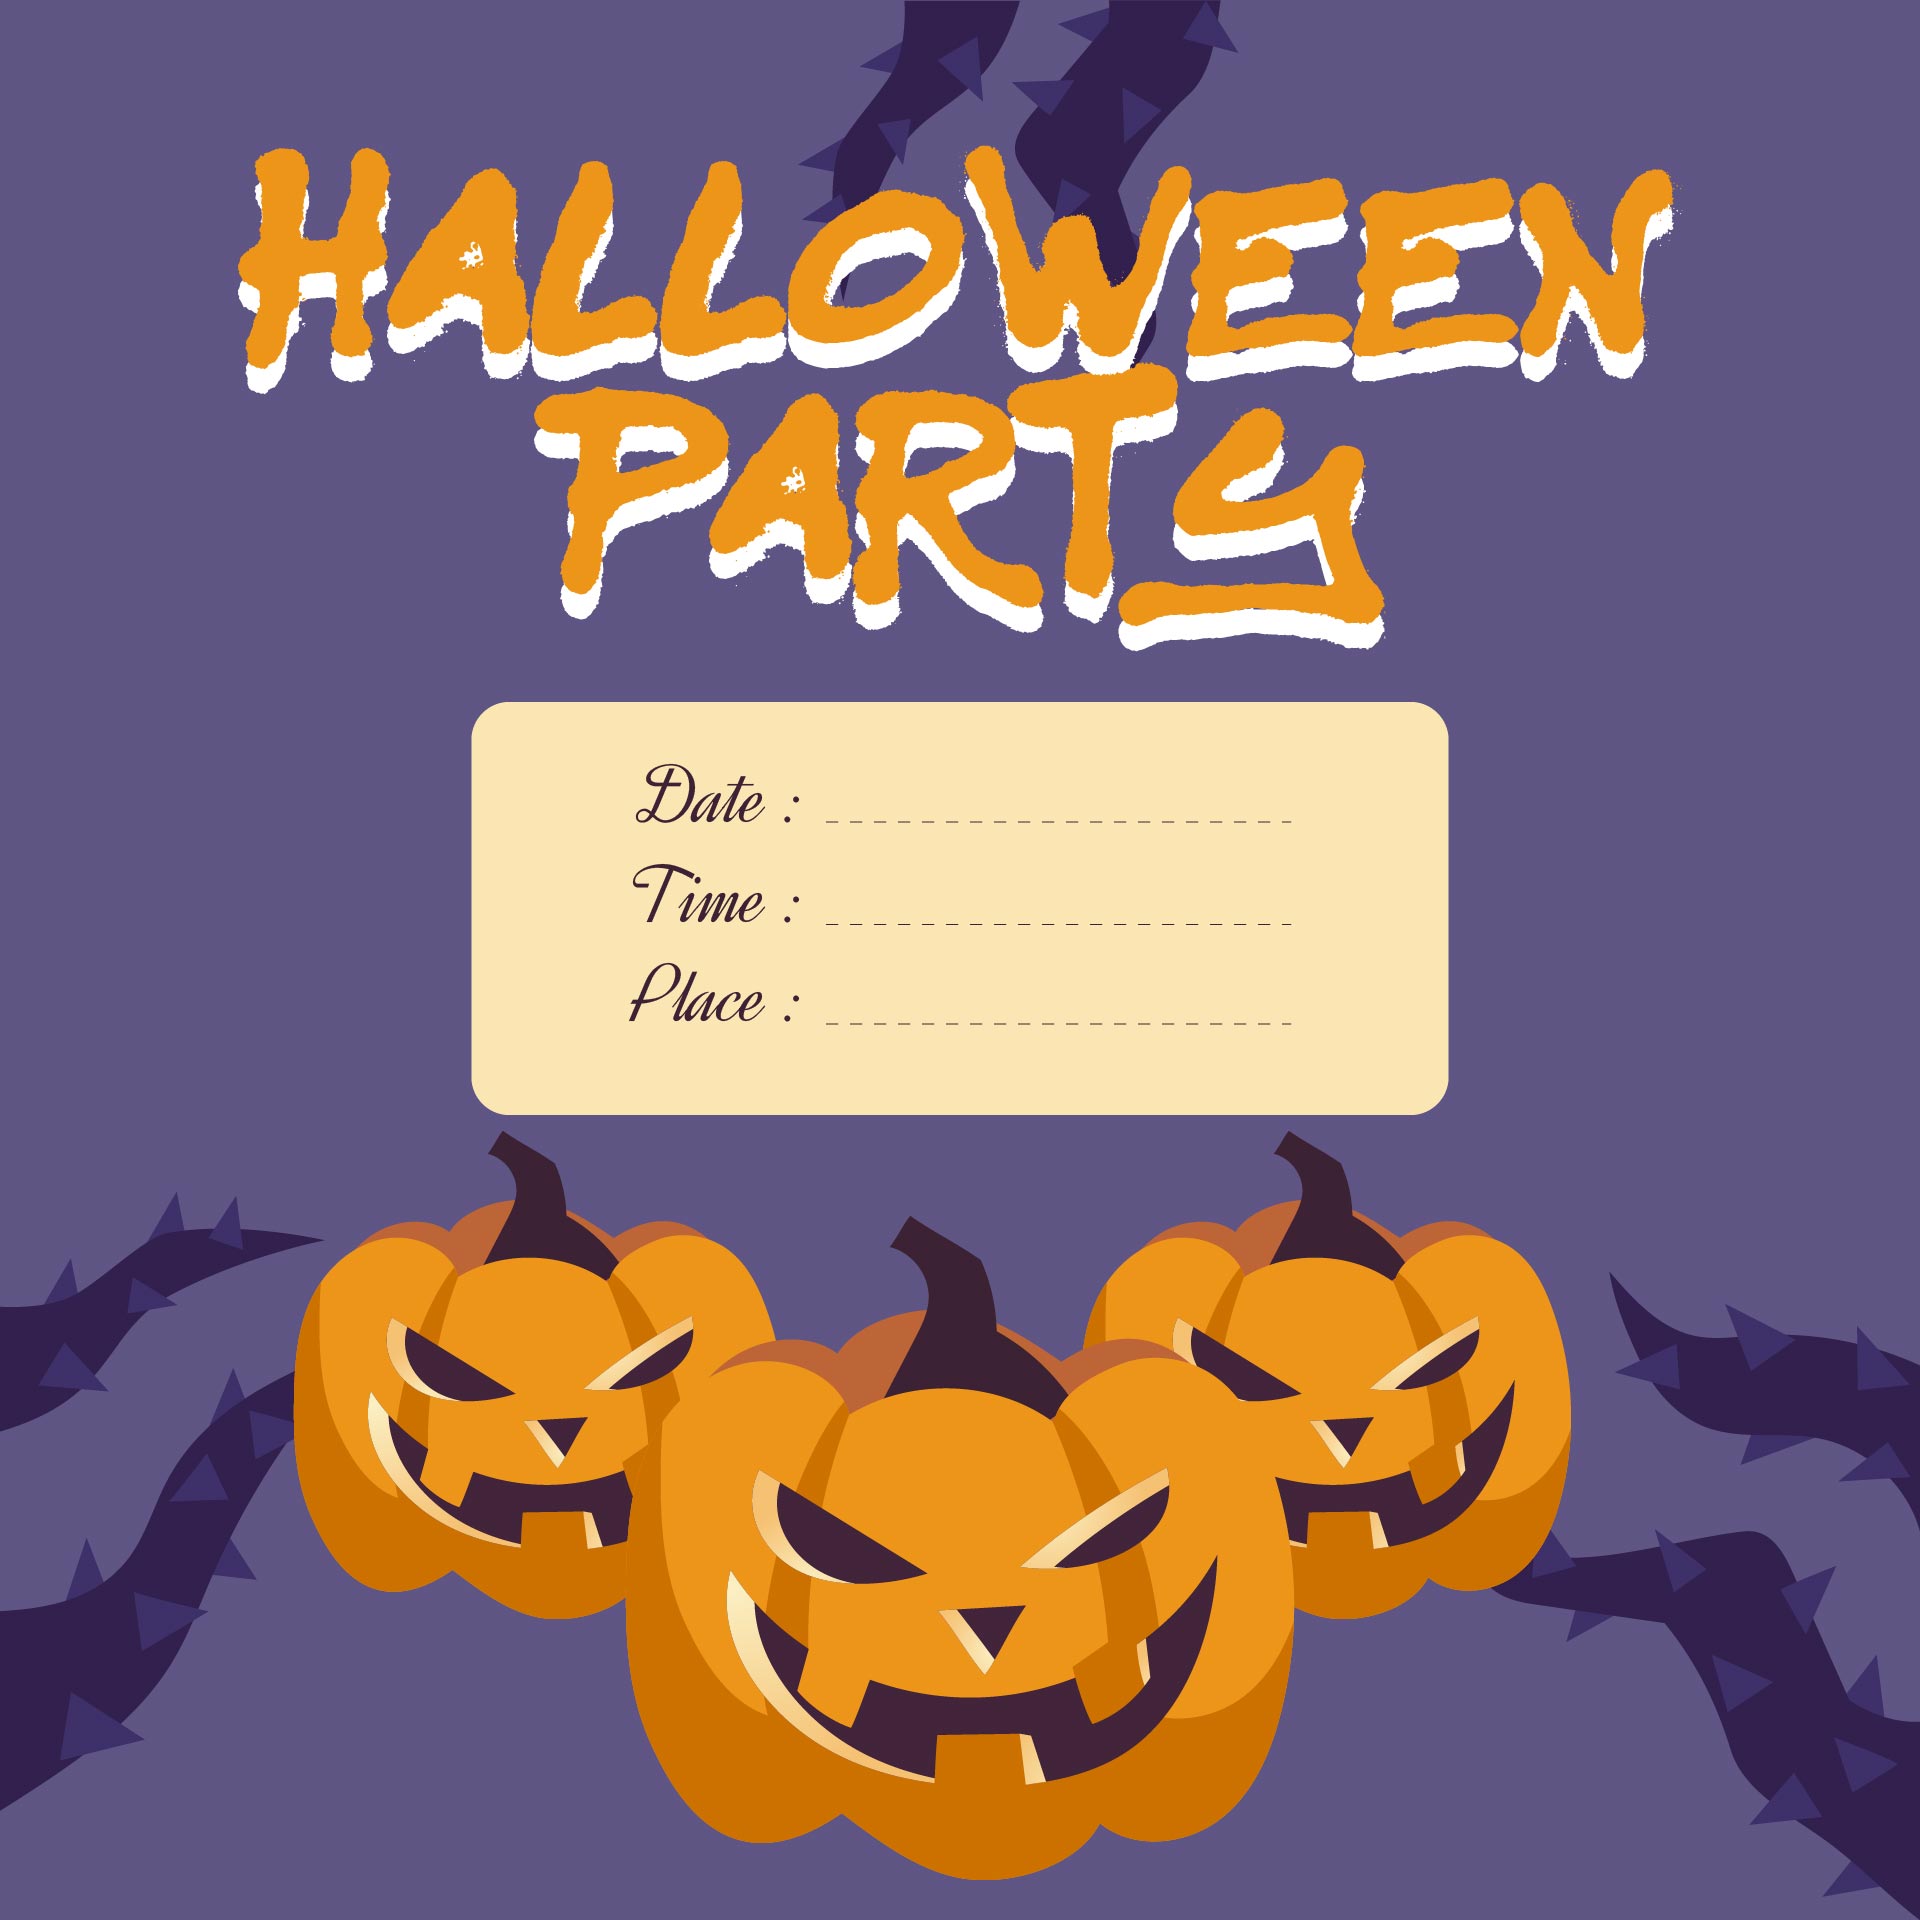 Halloween Party Invitations Templates